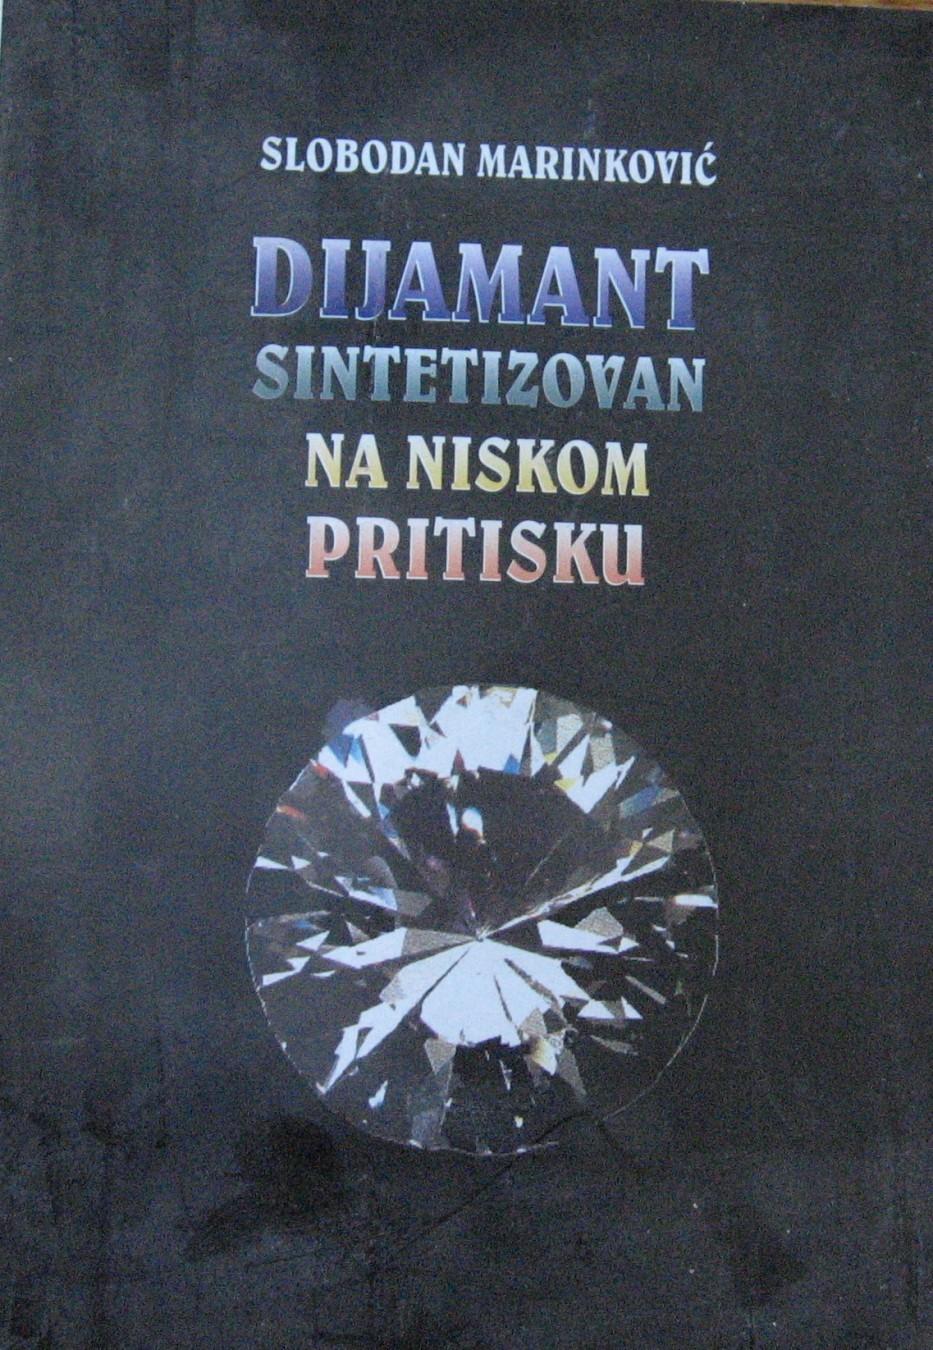 Dijamant sintetizovan na niskom pritisku - Slobodan Marinković